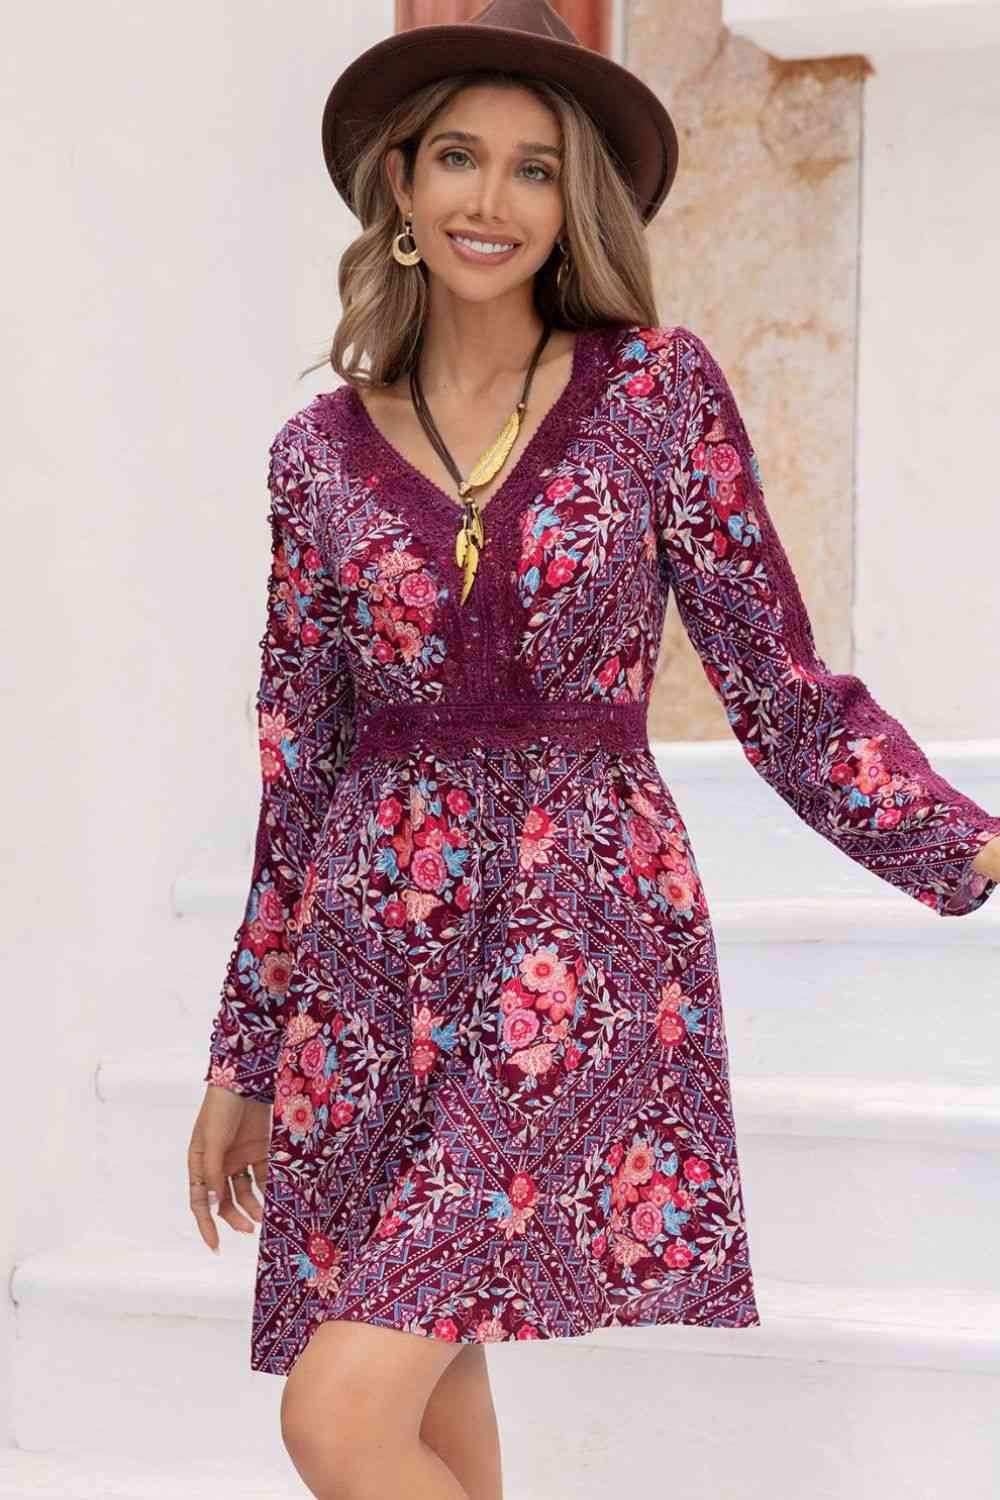 V-Neck Long Sleeve Floral Print Mini Dress in PurpleMini DressBeach Rose Co.